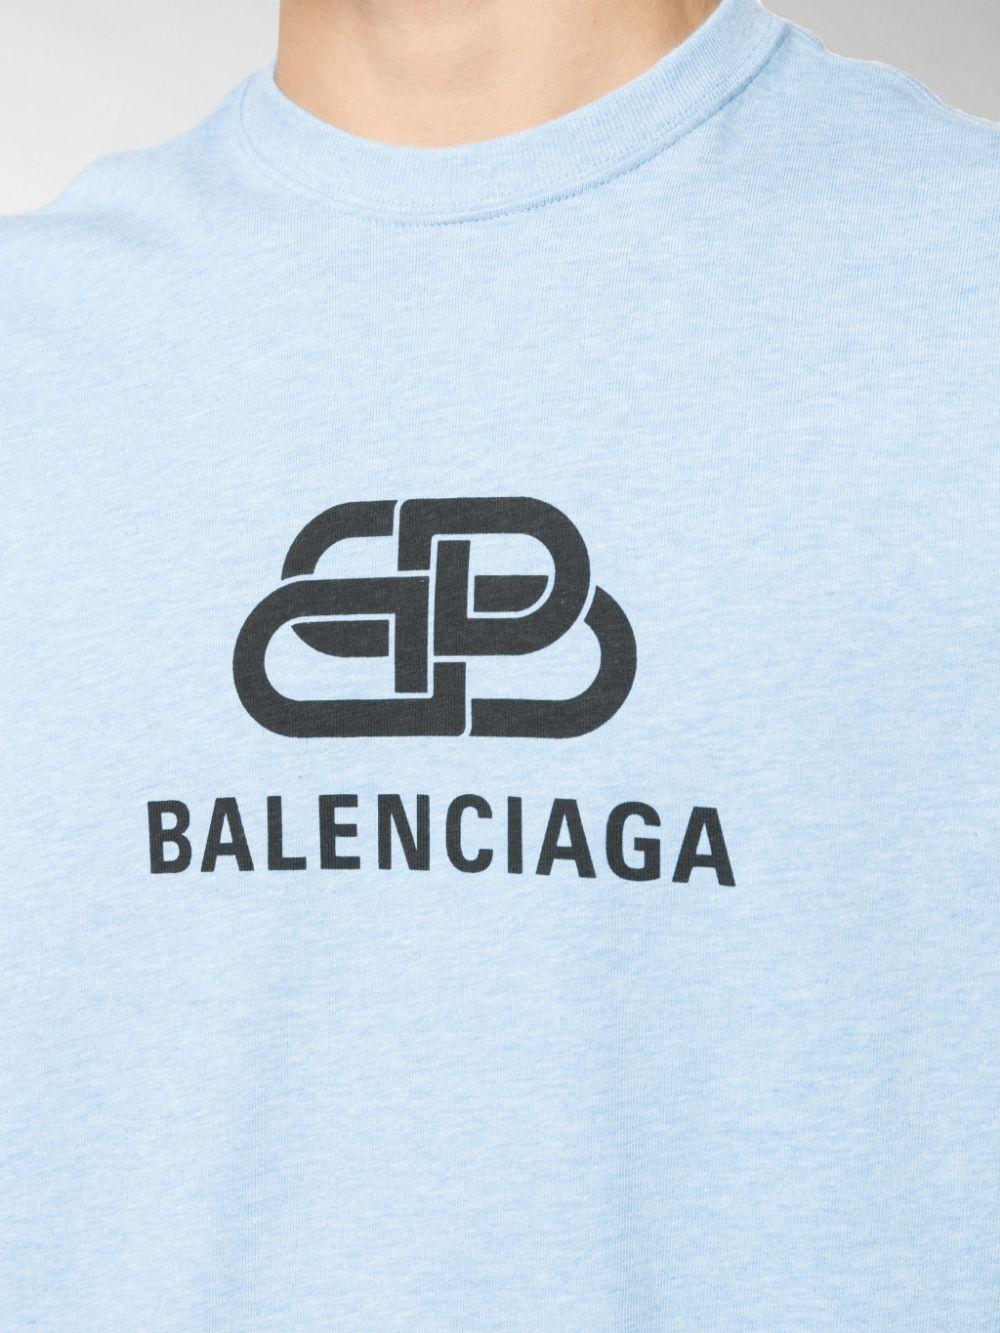 Balenciaga Bb Logo T-shirt in Blue for Men - Lyst